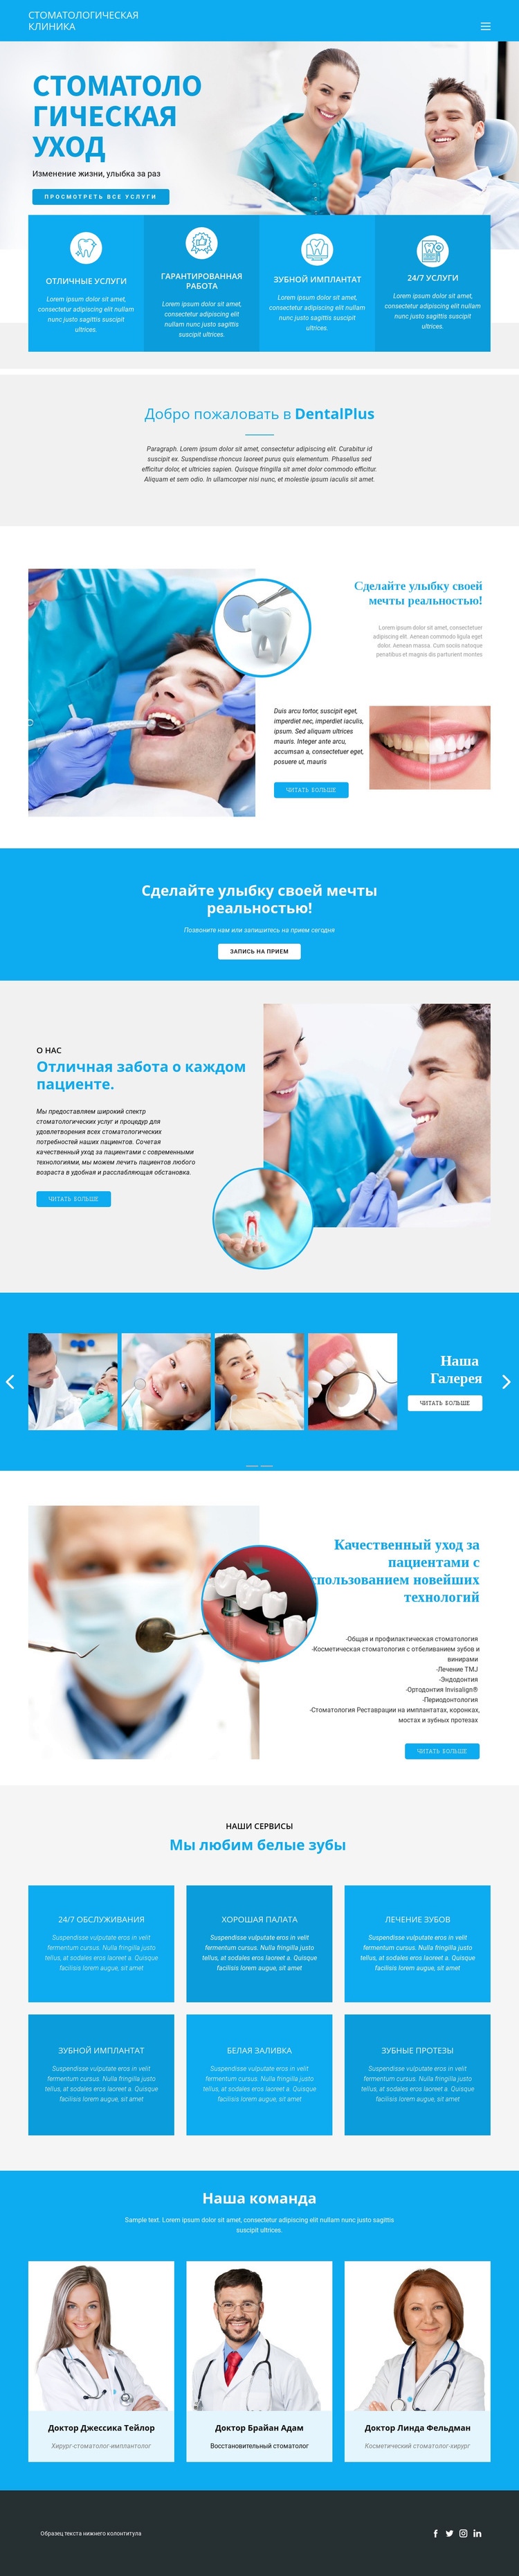 Стоматология и медицина Дизайн сайта